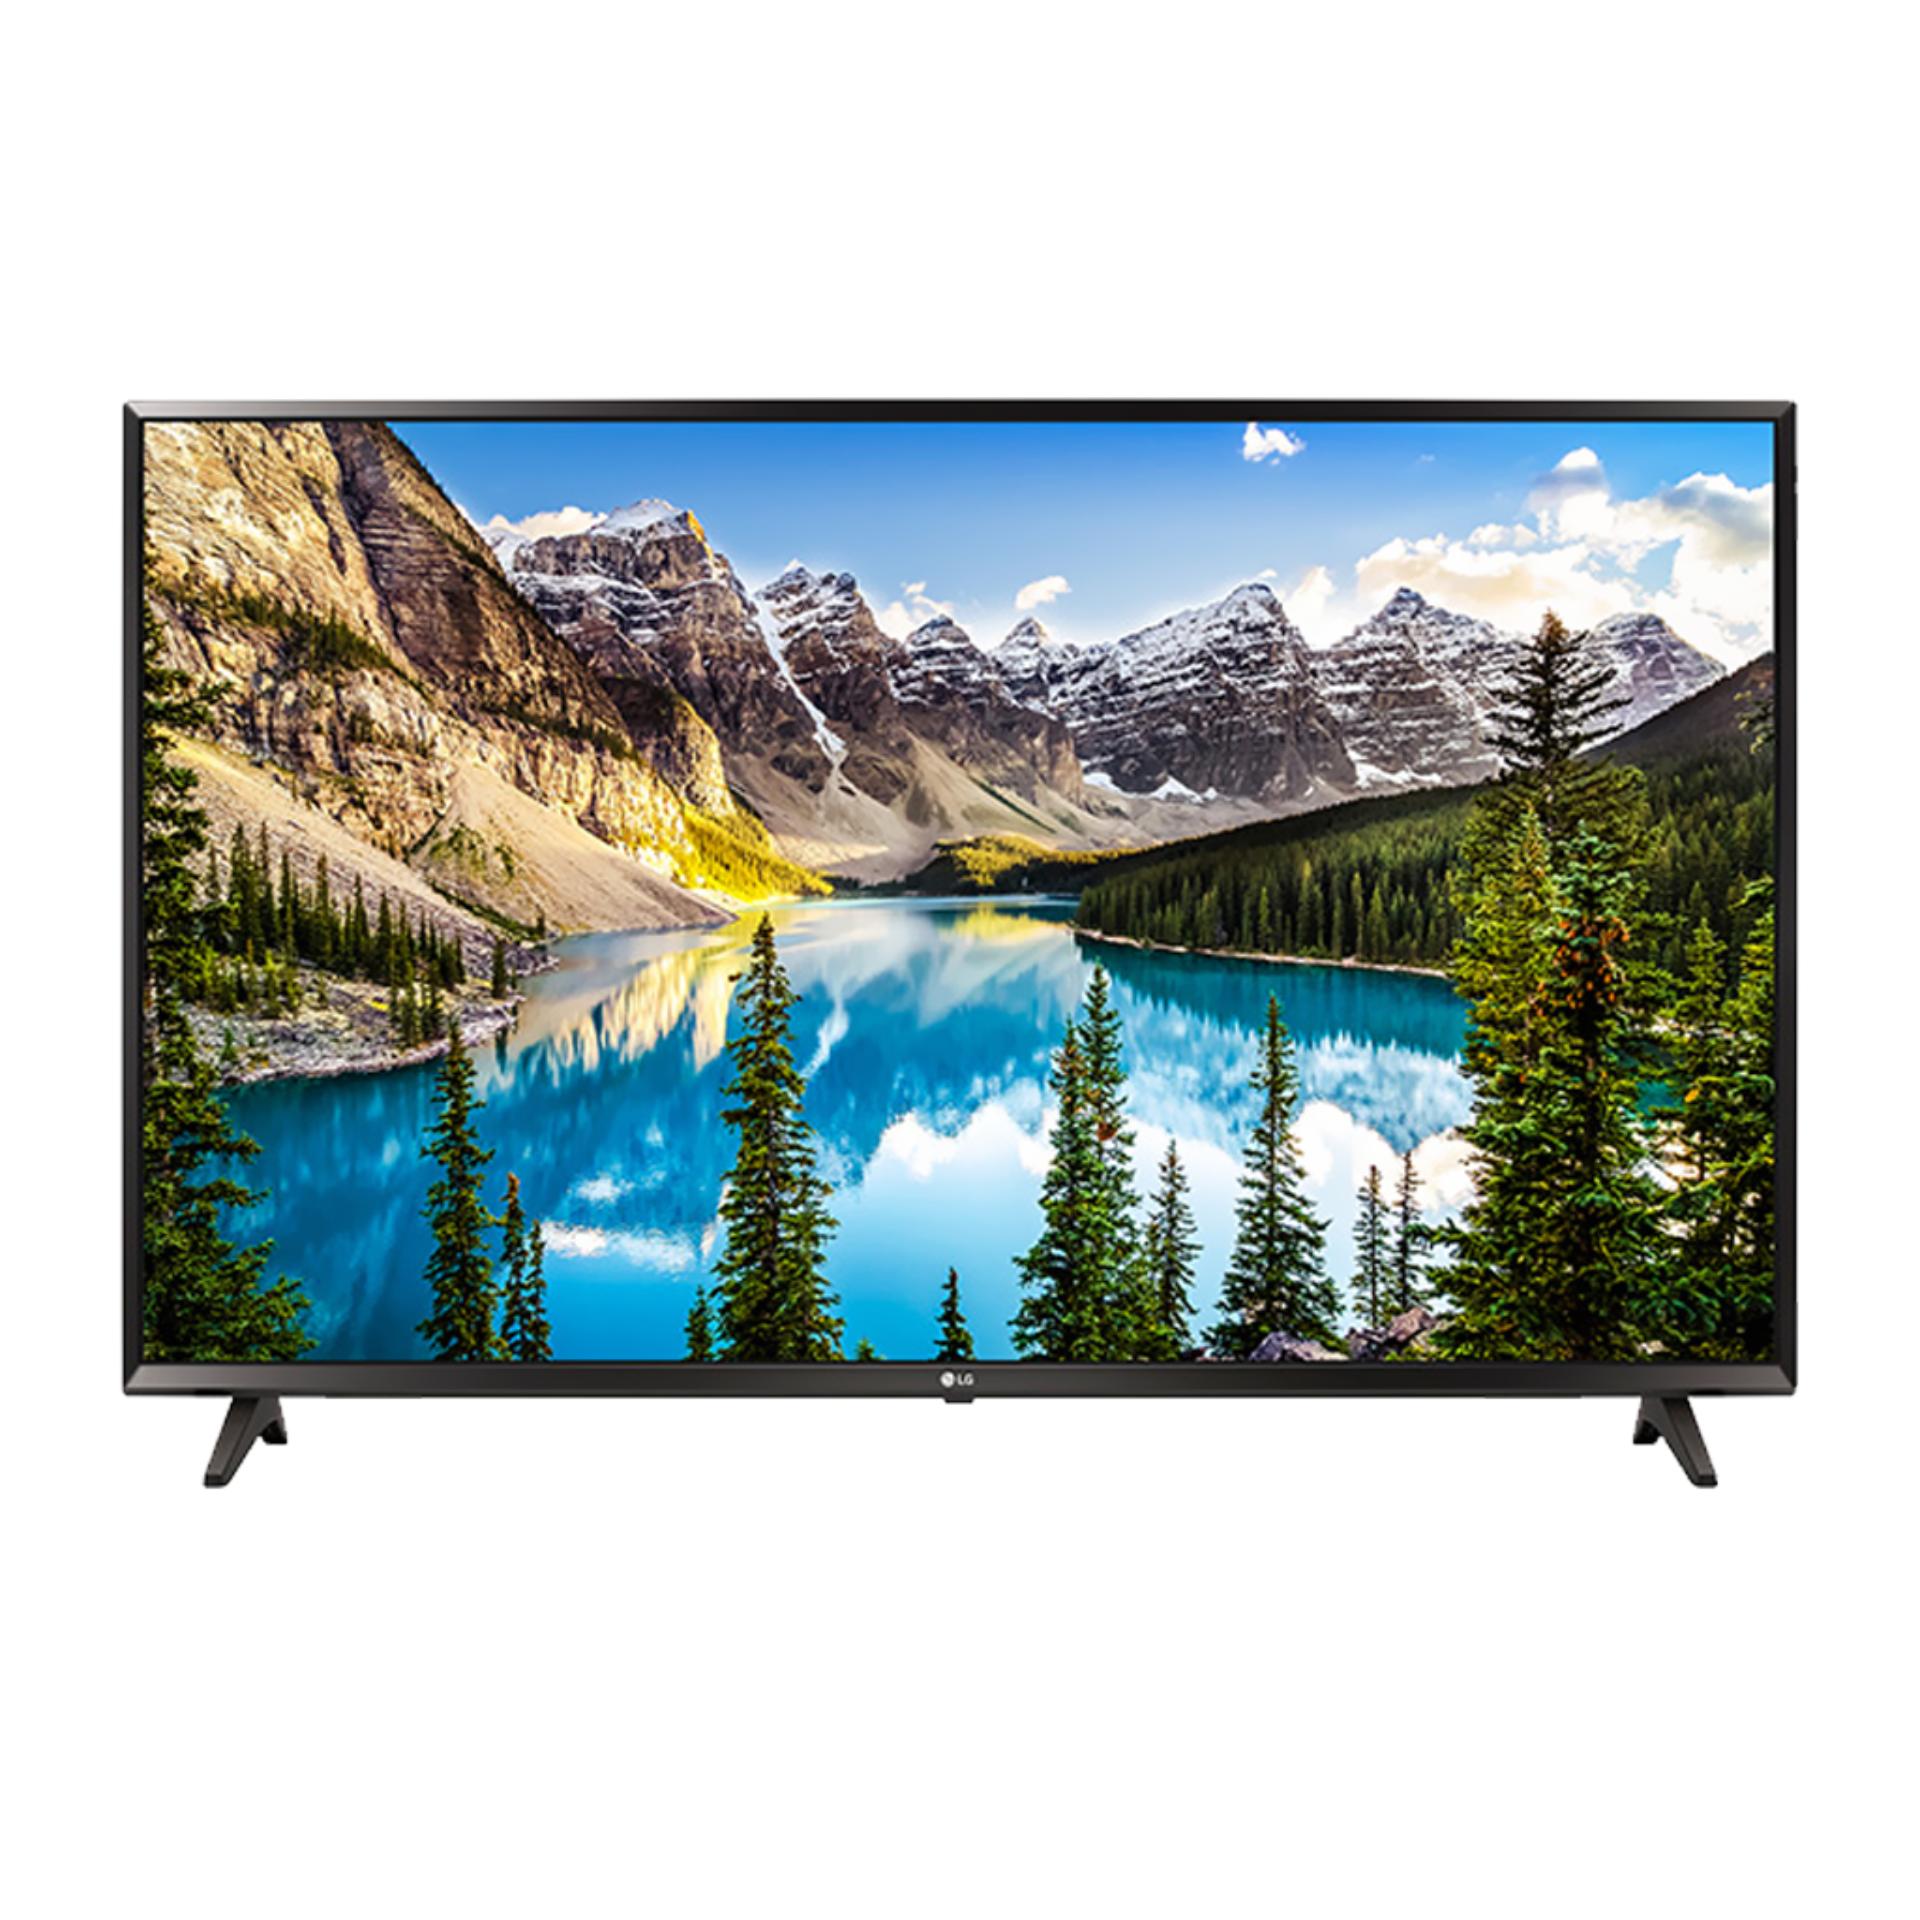 Купить телевизор в н н. Телевизор LG 43uj750v. LG 55uj670v. Телевизор смарт ТВ 55 дюймов LG. Телевизор LG 49uj630v.